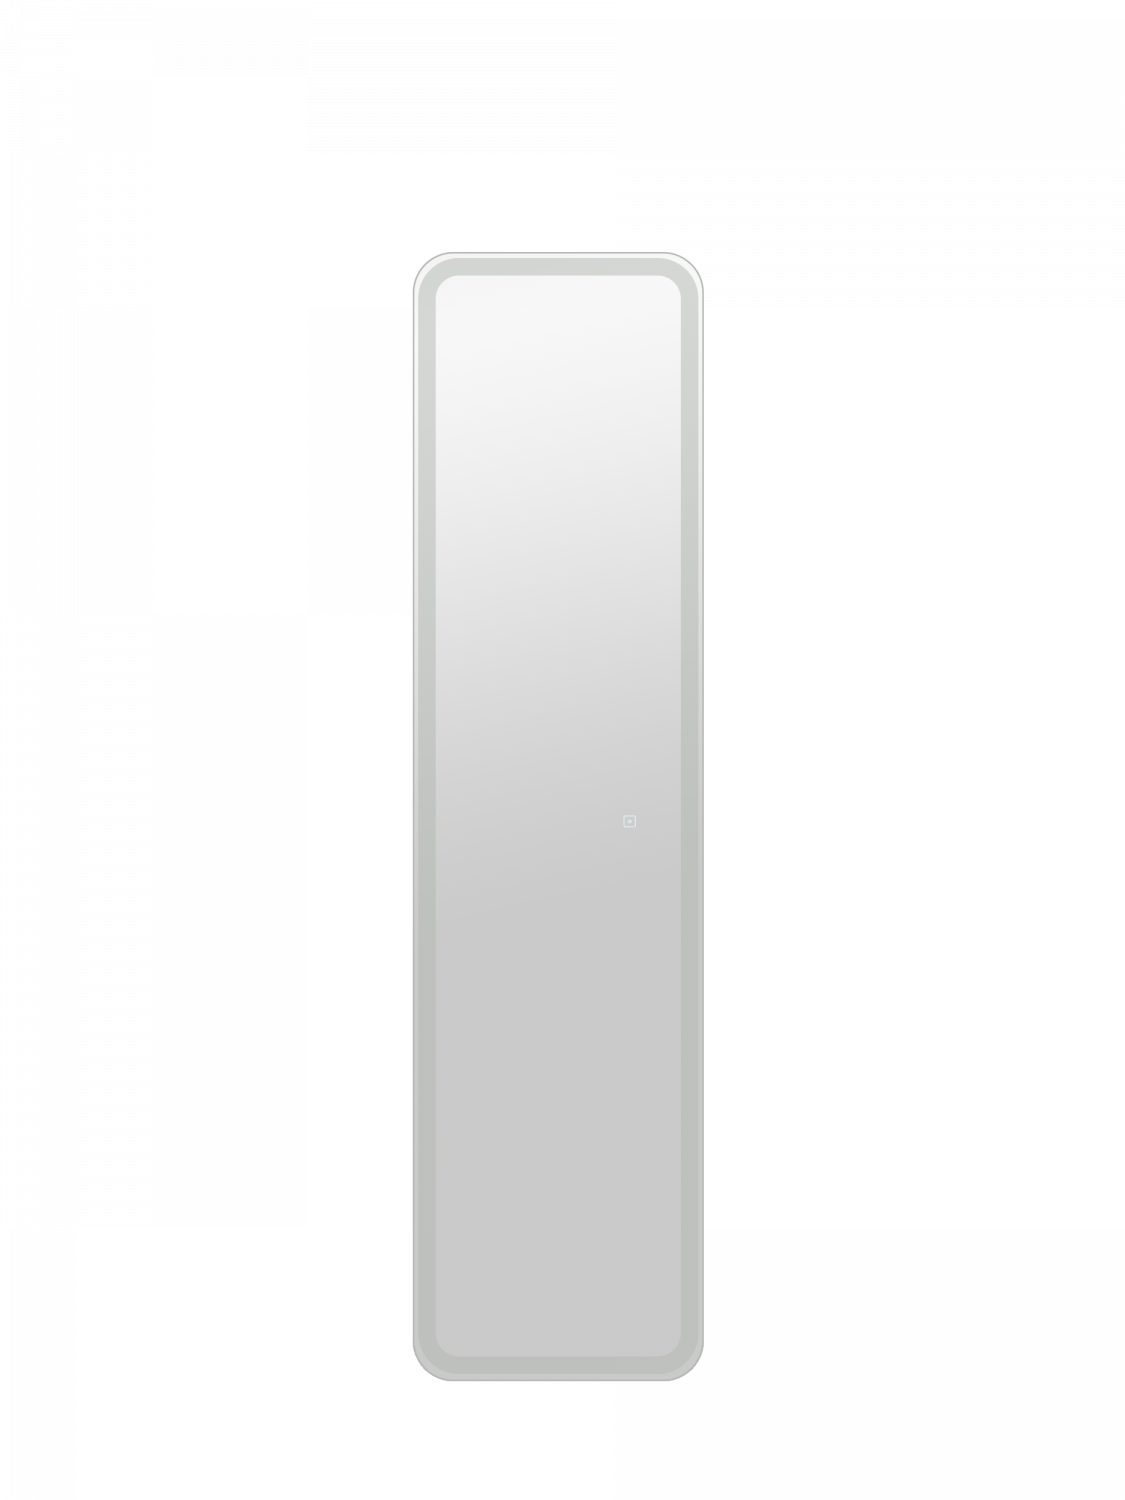 Шкаф-пенал Art&Max Platino 40 см AM-Pla-400-1600-1D-R-L-DS-F с подсветкой, белый